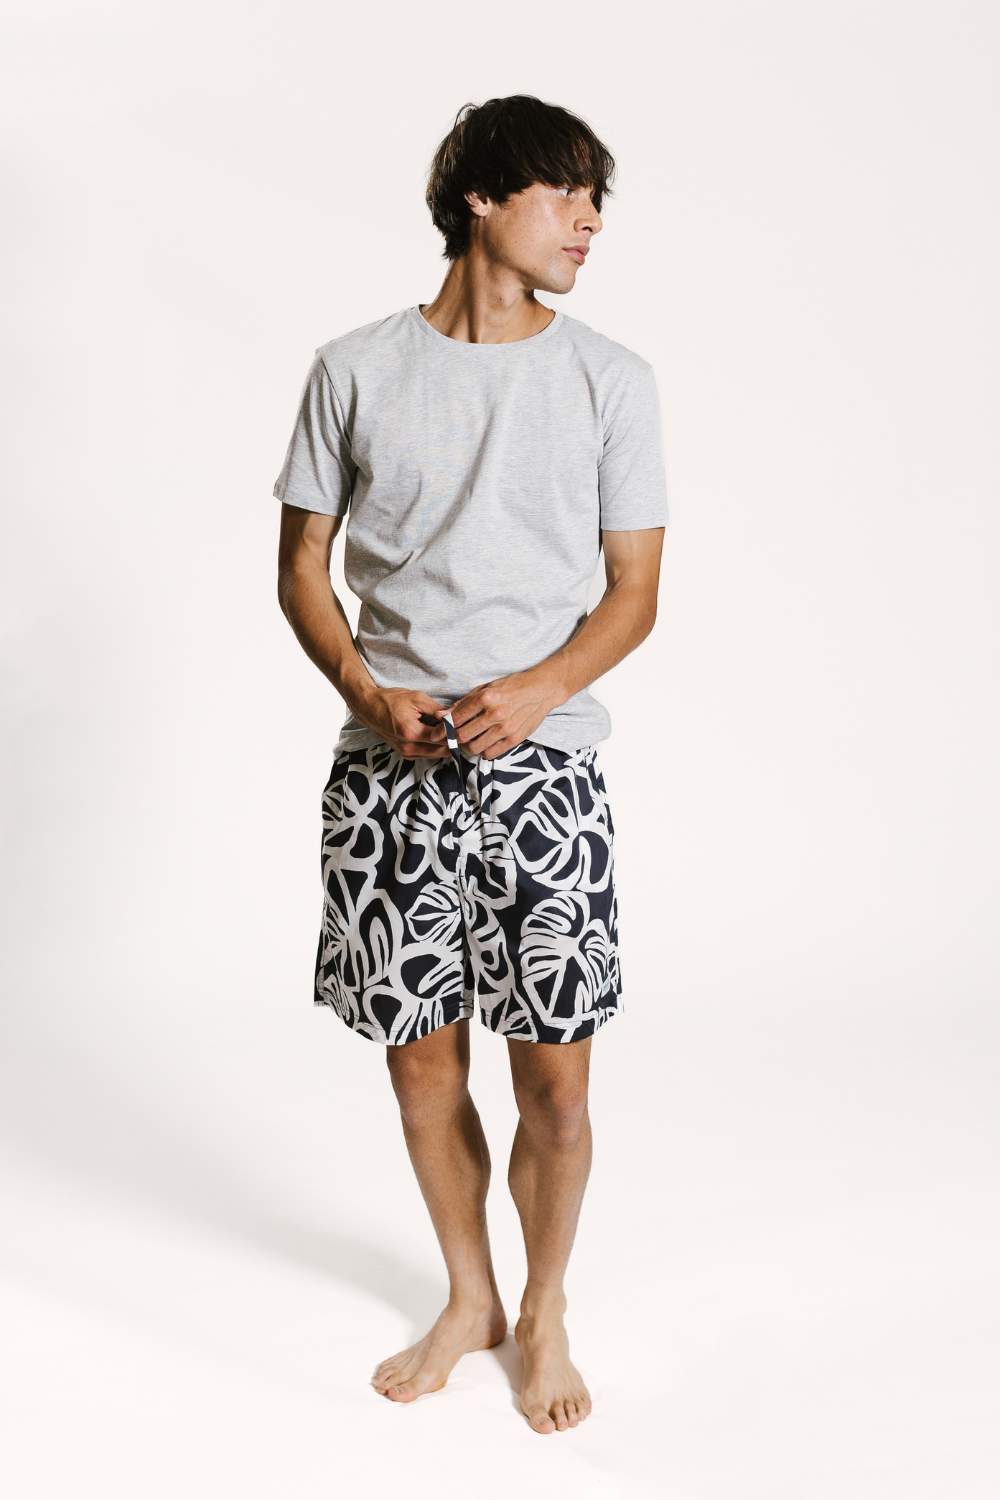 Panama Print sleepwear Shorts For Men